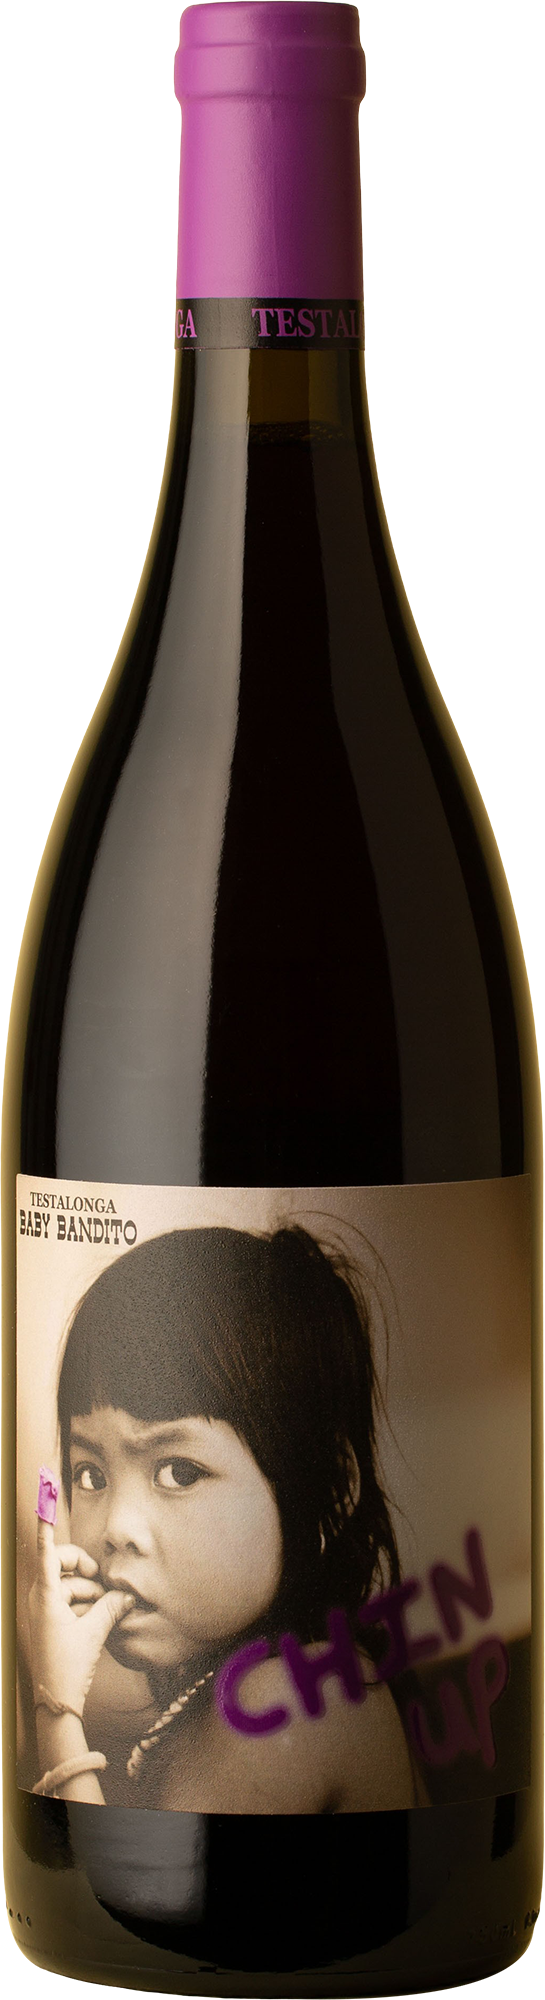 Testalonga - Baby Bandito Chin Up Cinsault 2021 Red Wine